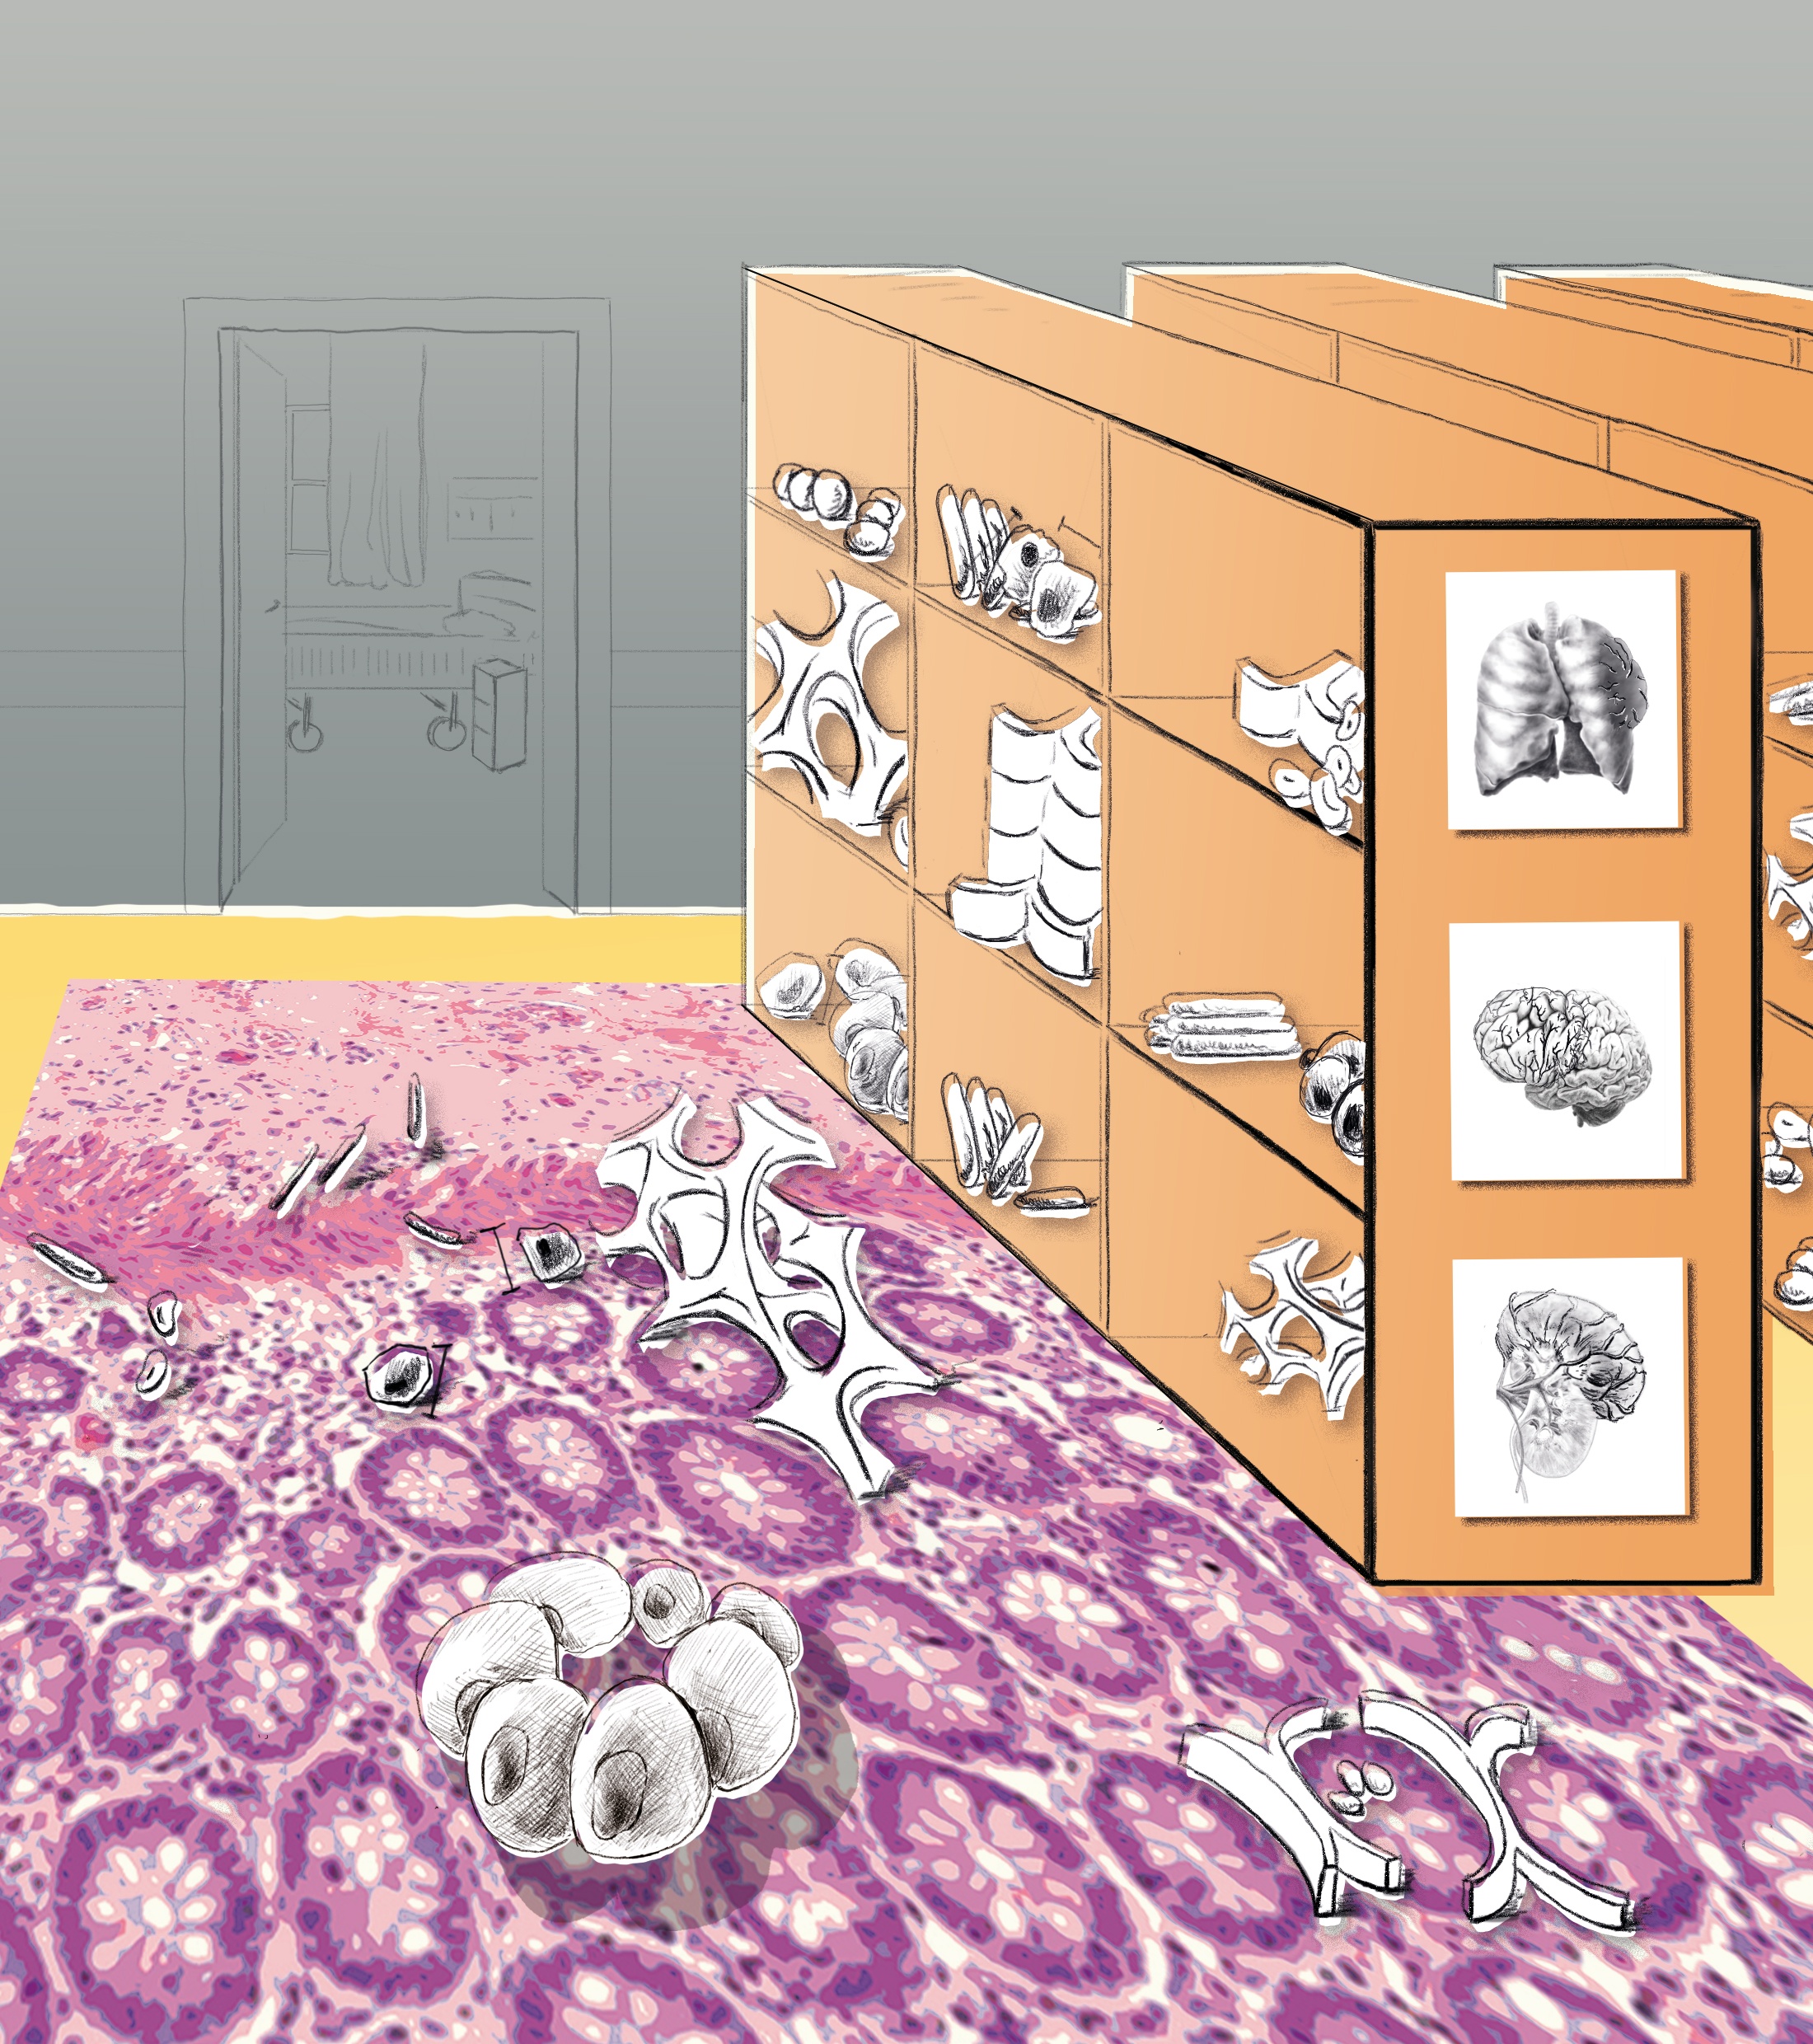 Cellular building blocks as the basis of histopathological diagnostics.